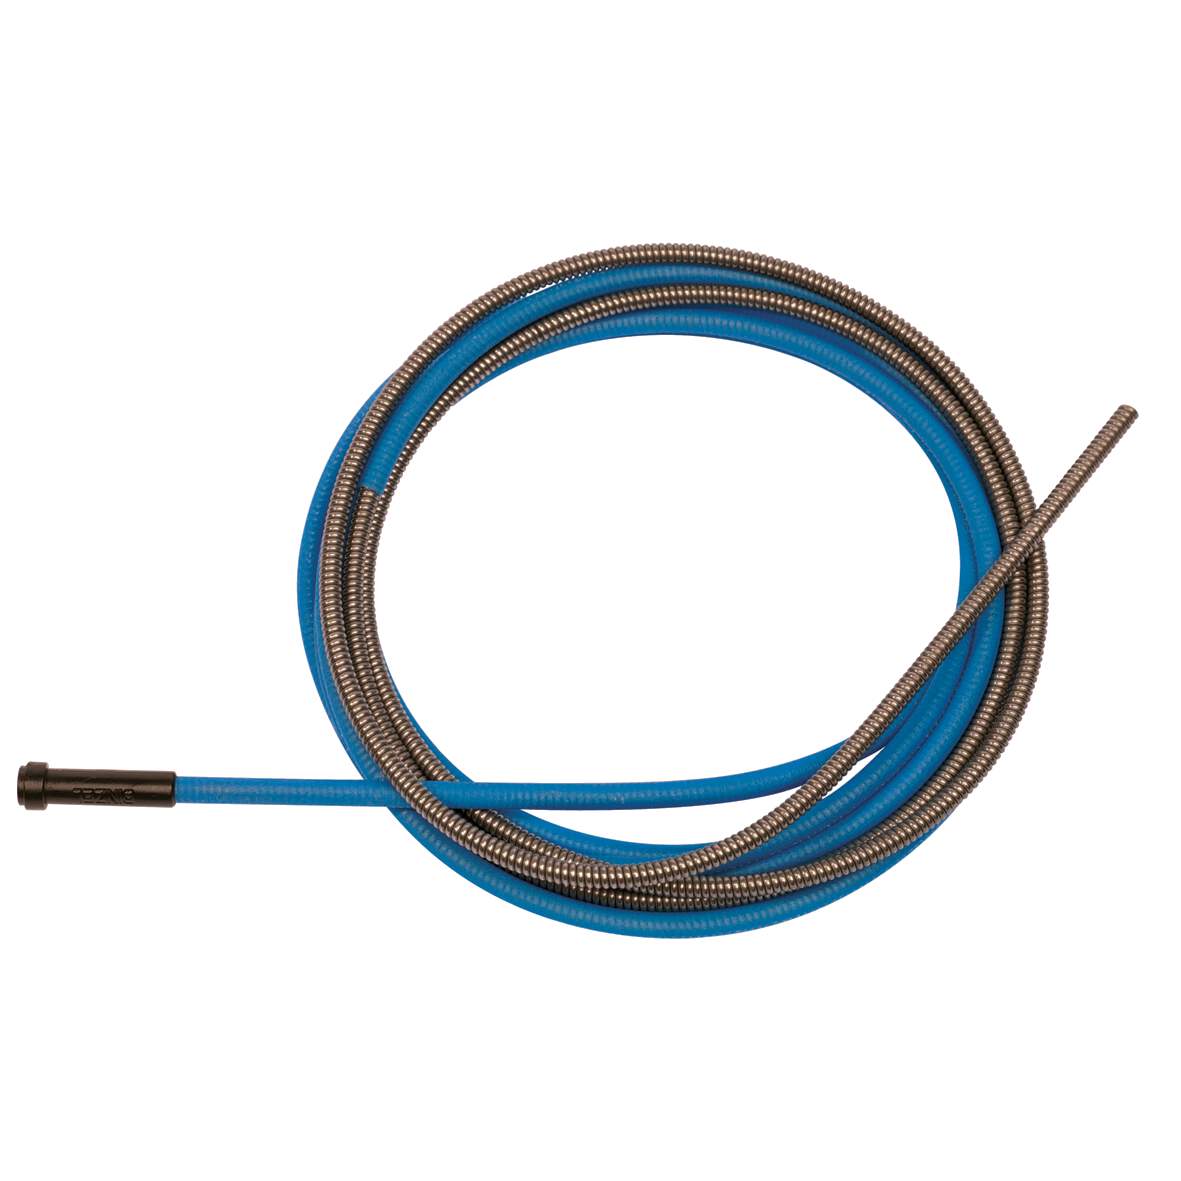 1182666 - Führungsspirale blau 4m f. Draht DM 0,6-0,8mm